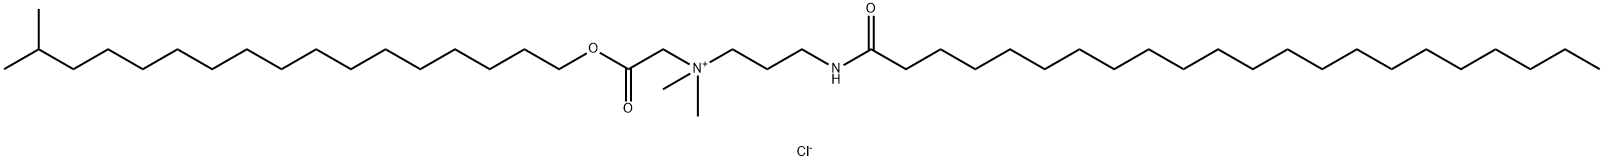 ISOSTEARYL BEHENAMIDOPROPYL BETAINATE CHLORIDE|异硬脂醇山嵛酰胺丙基甜菜碱酯氯化物